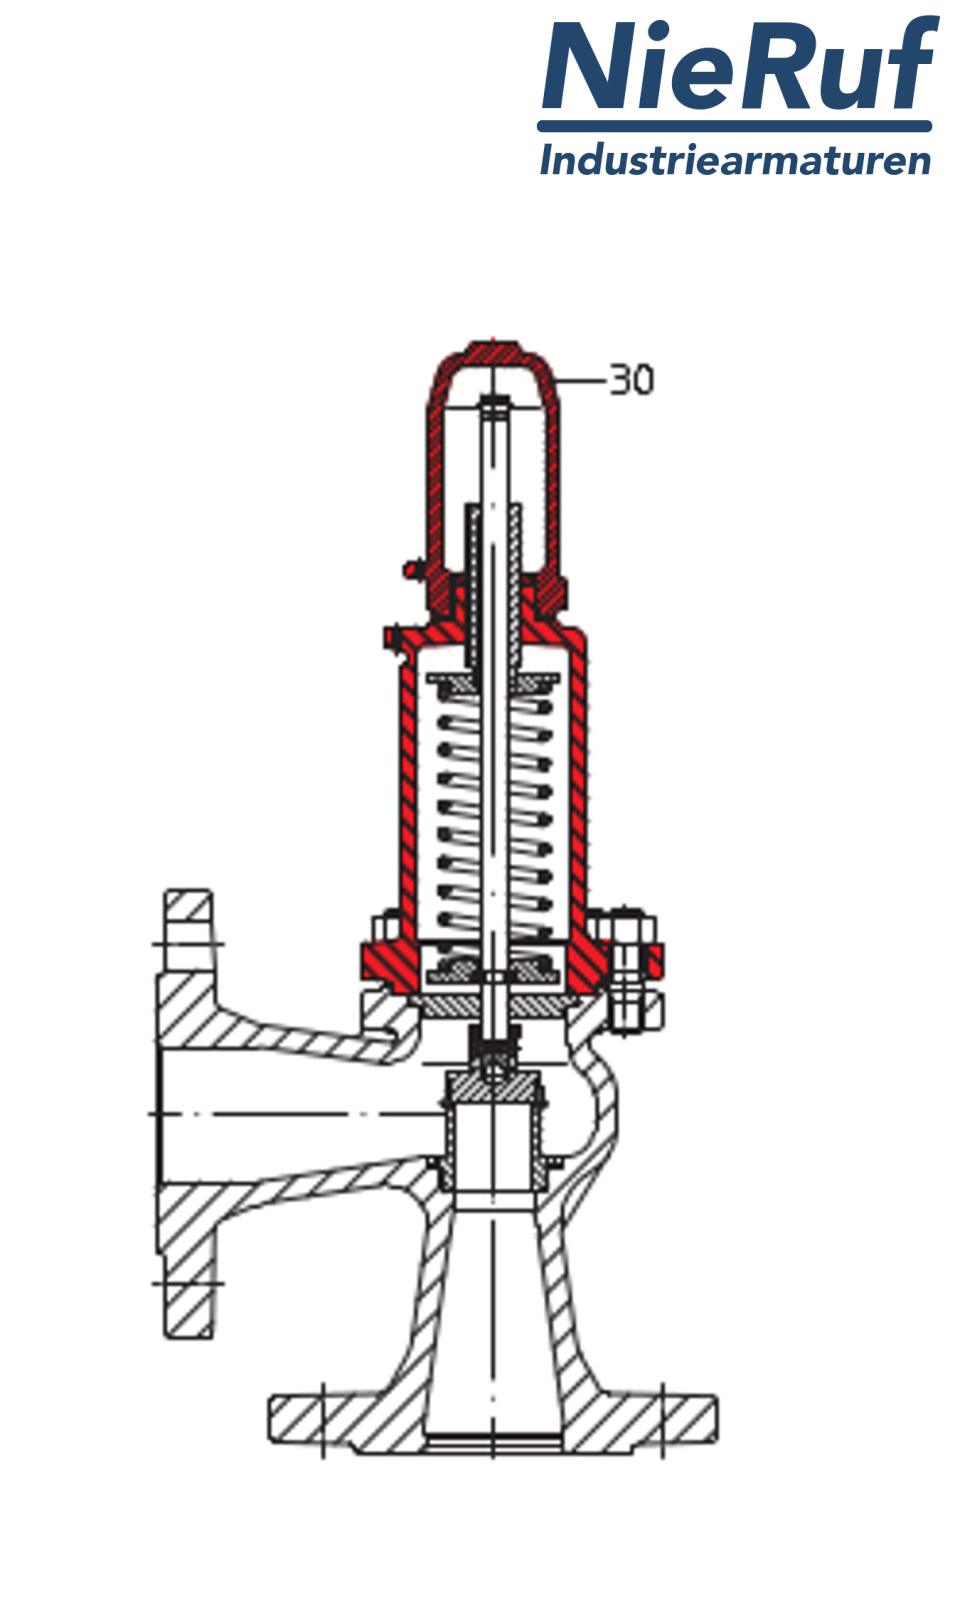 flange-safety valve DN15/DN15 SF0101, cast iron EN-JL1040 FPM, without lever